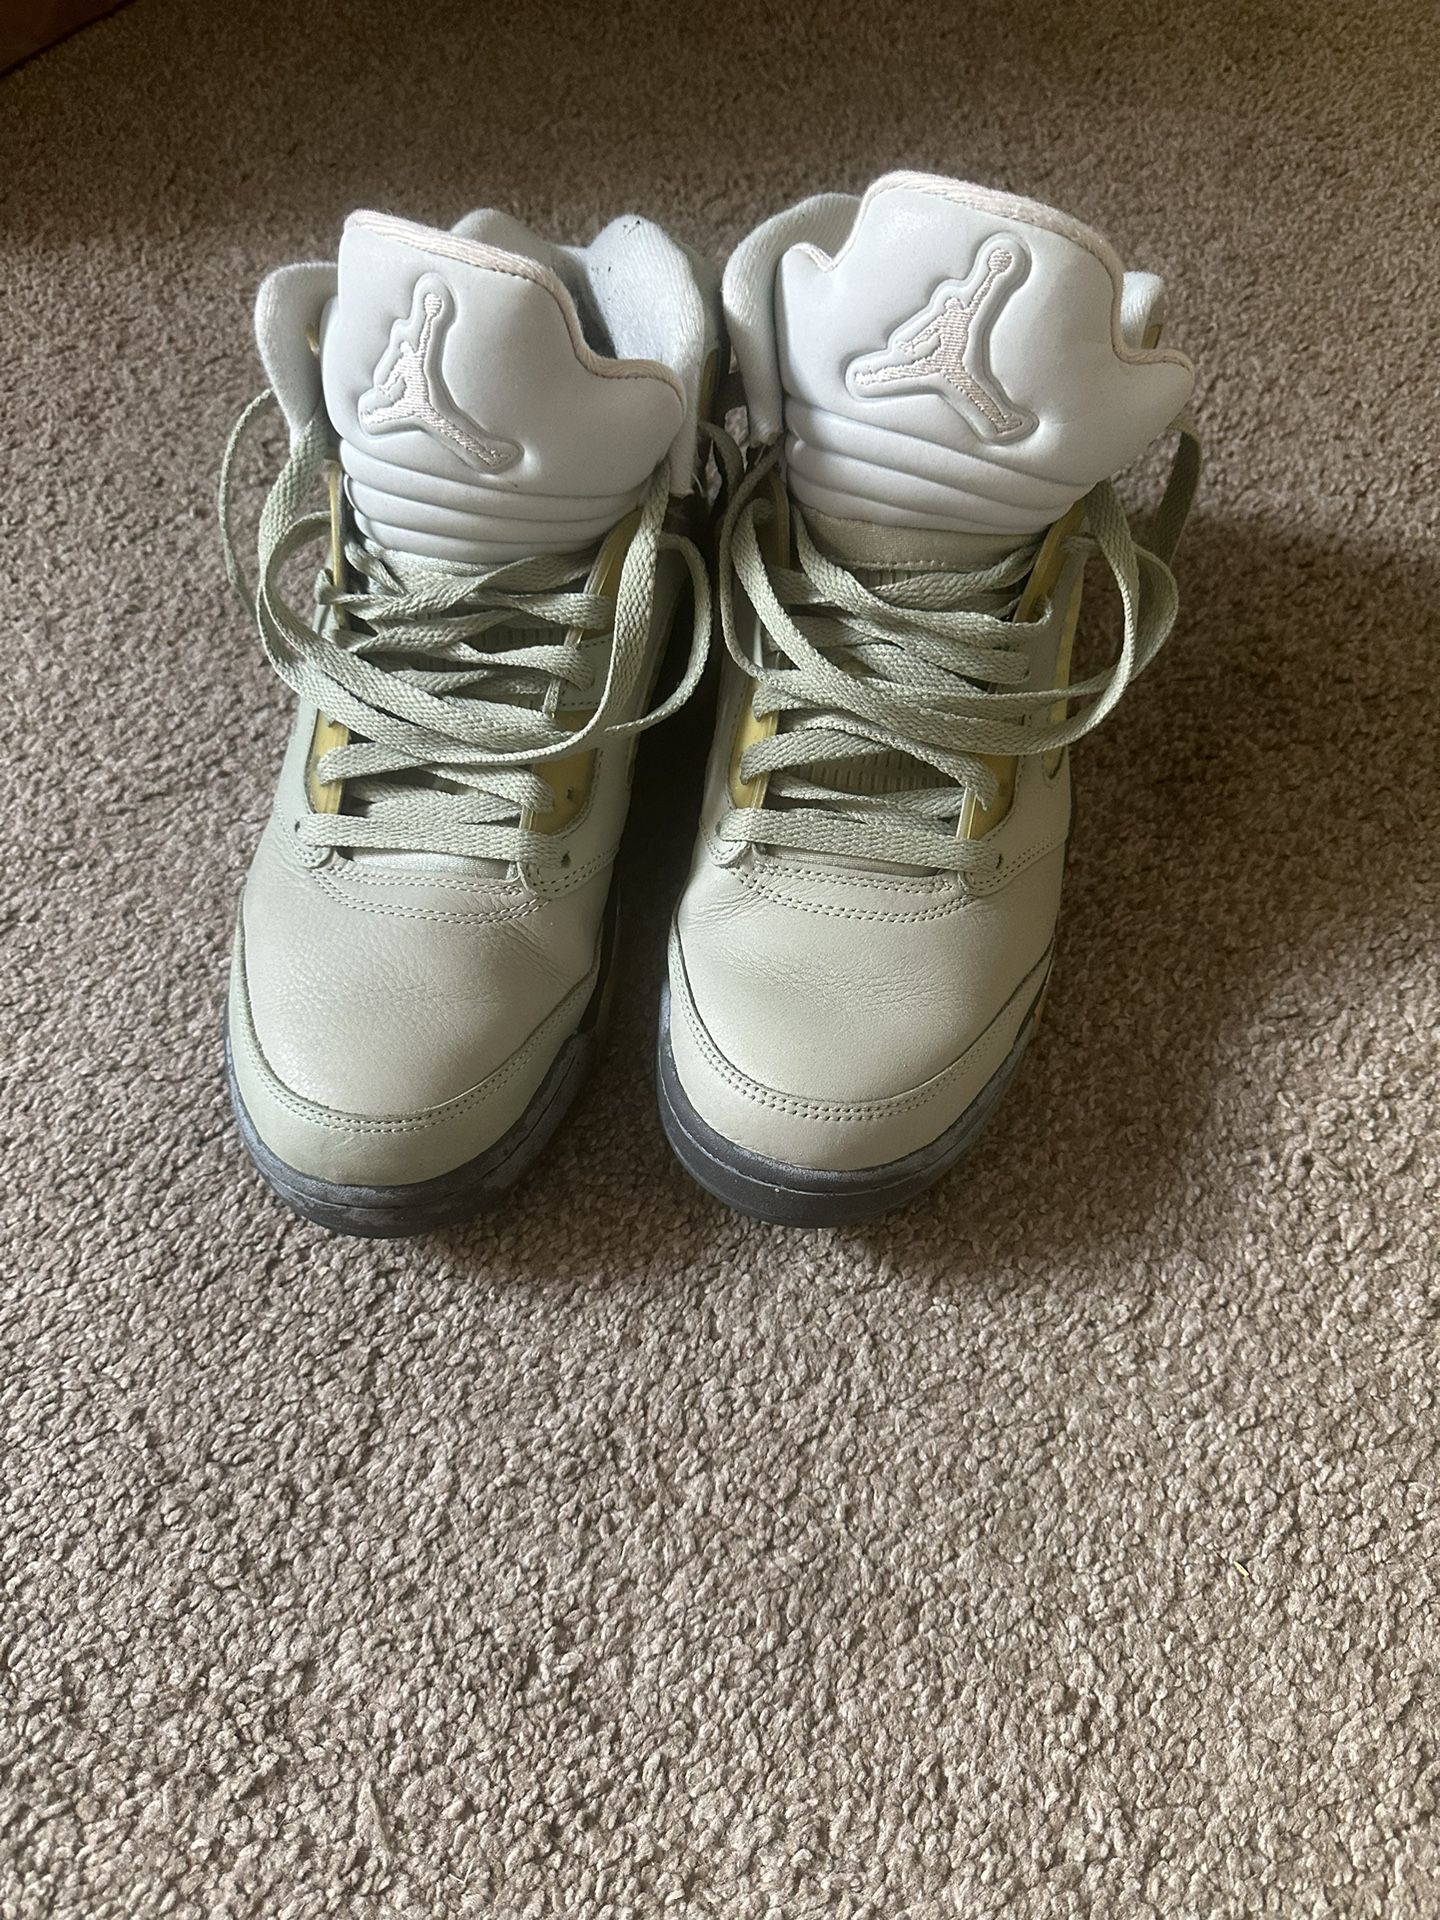 Retro Jordan 5 Size 9